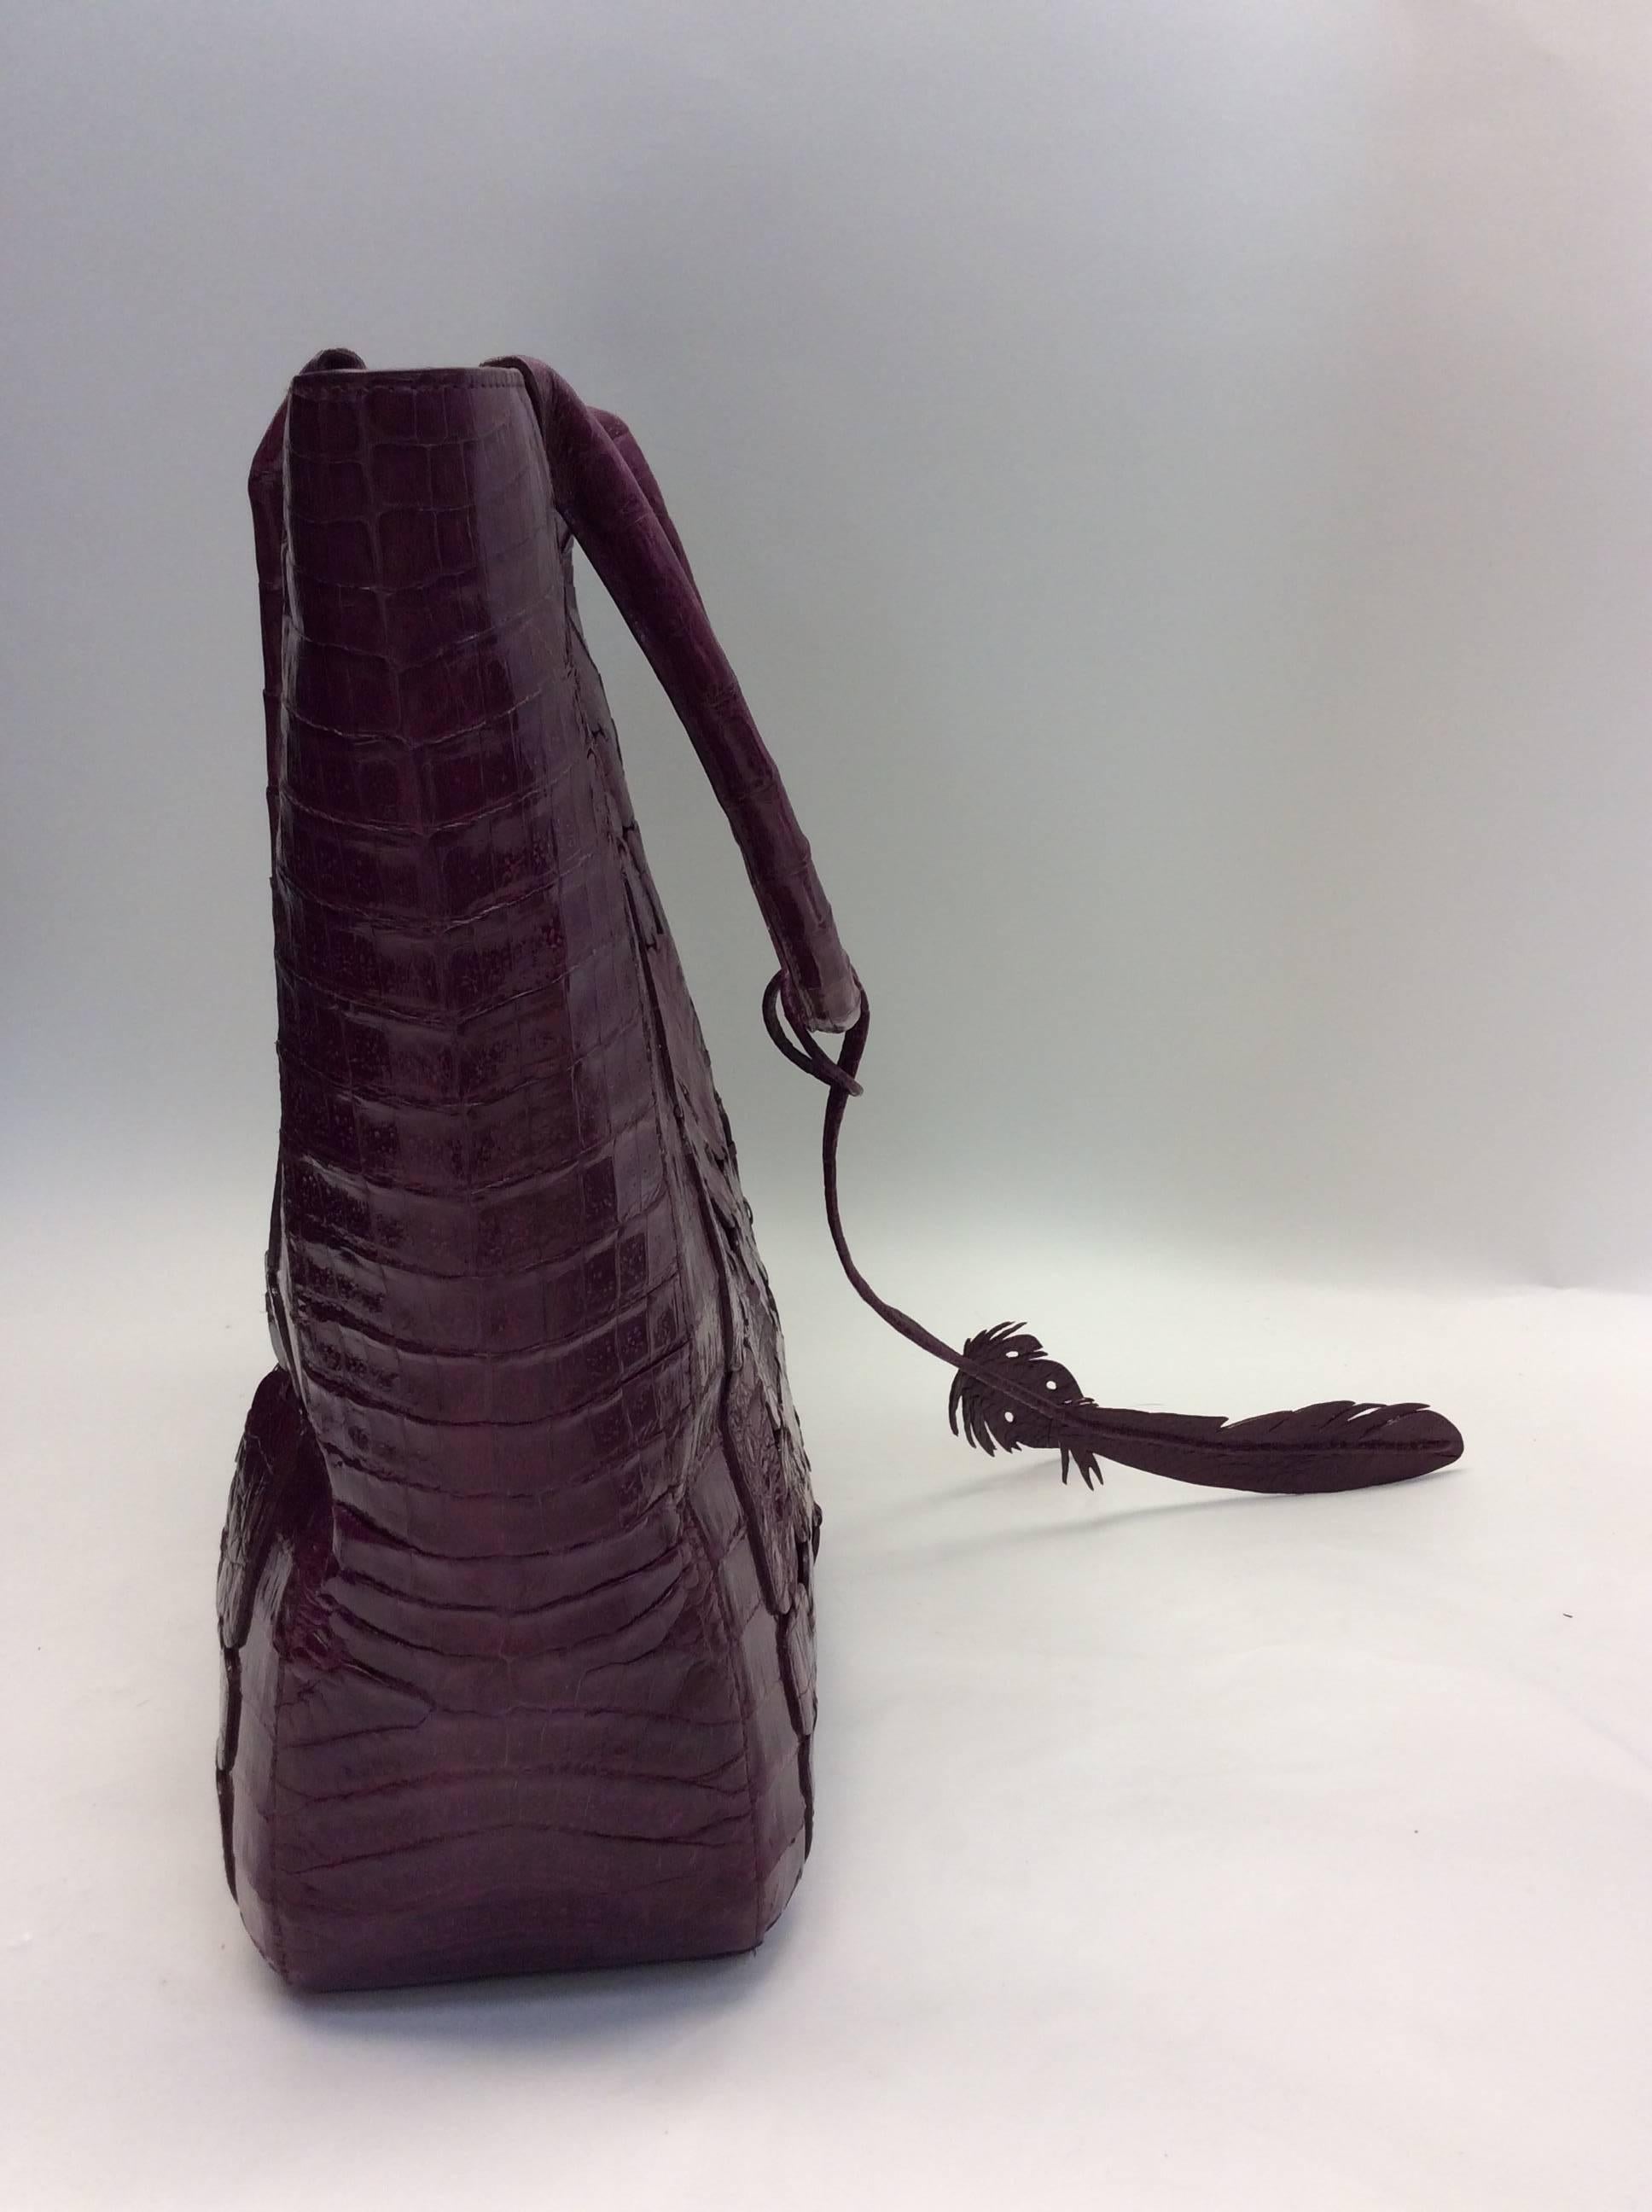 Nancy Gonzalez Large Purple Crocodile Shoulder Bag
100% genuine crocodile
Made in Columbia
$2100
